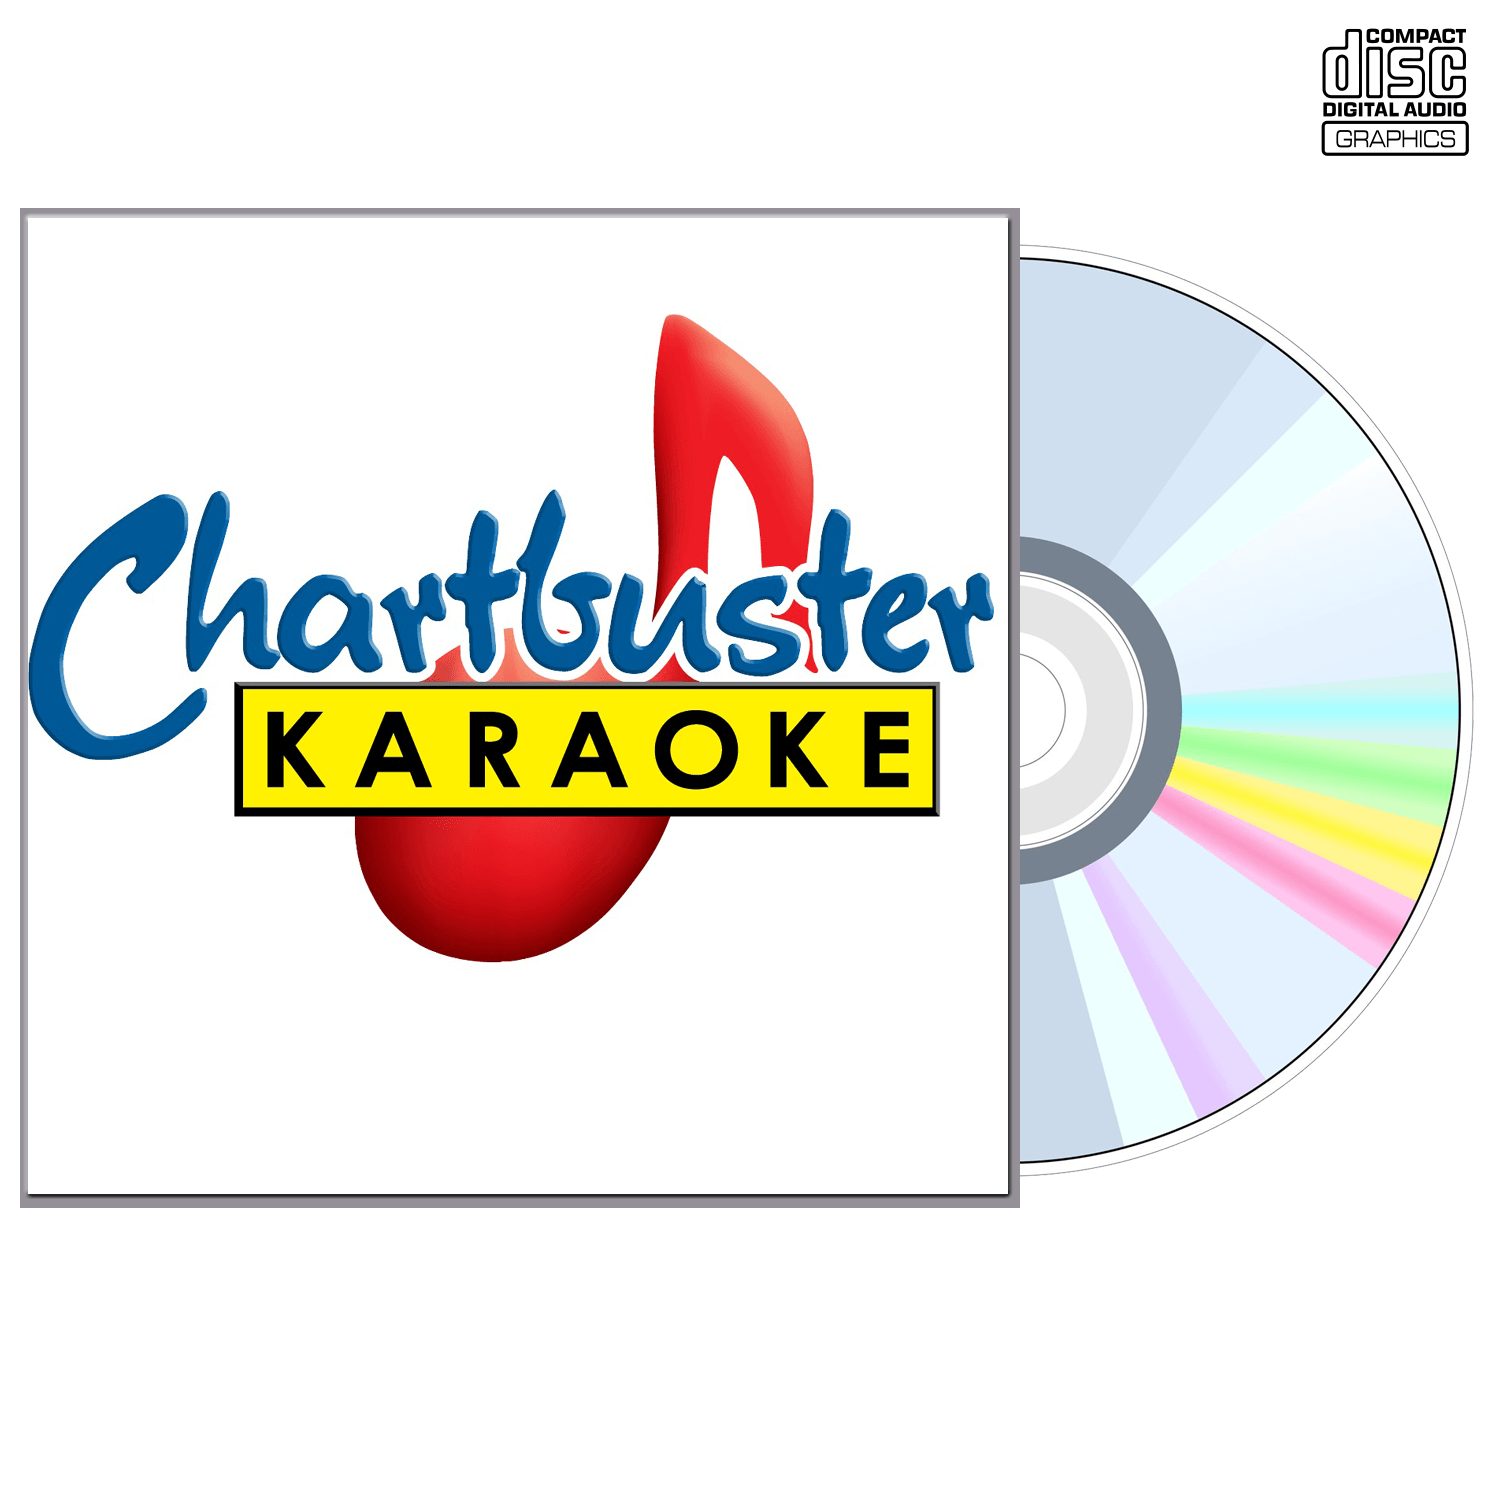 Toni Braxton - CD+G - Chartbuster Karaoke - Karaoke Home Entertainment